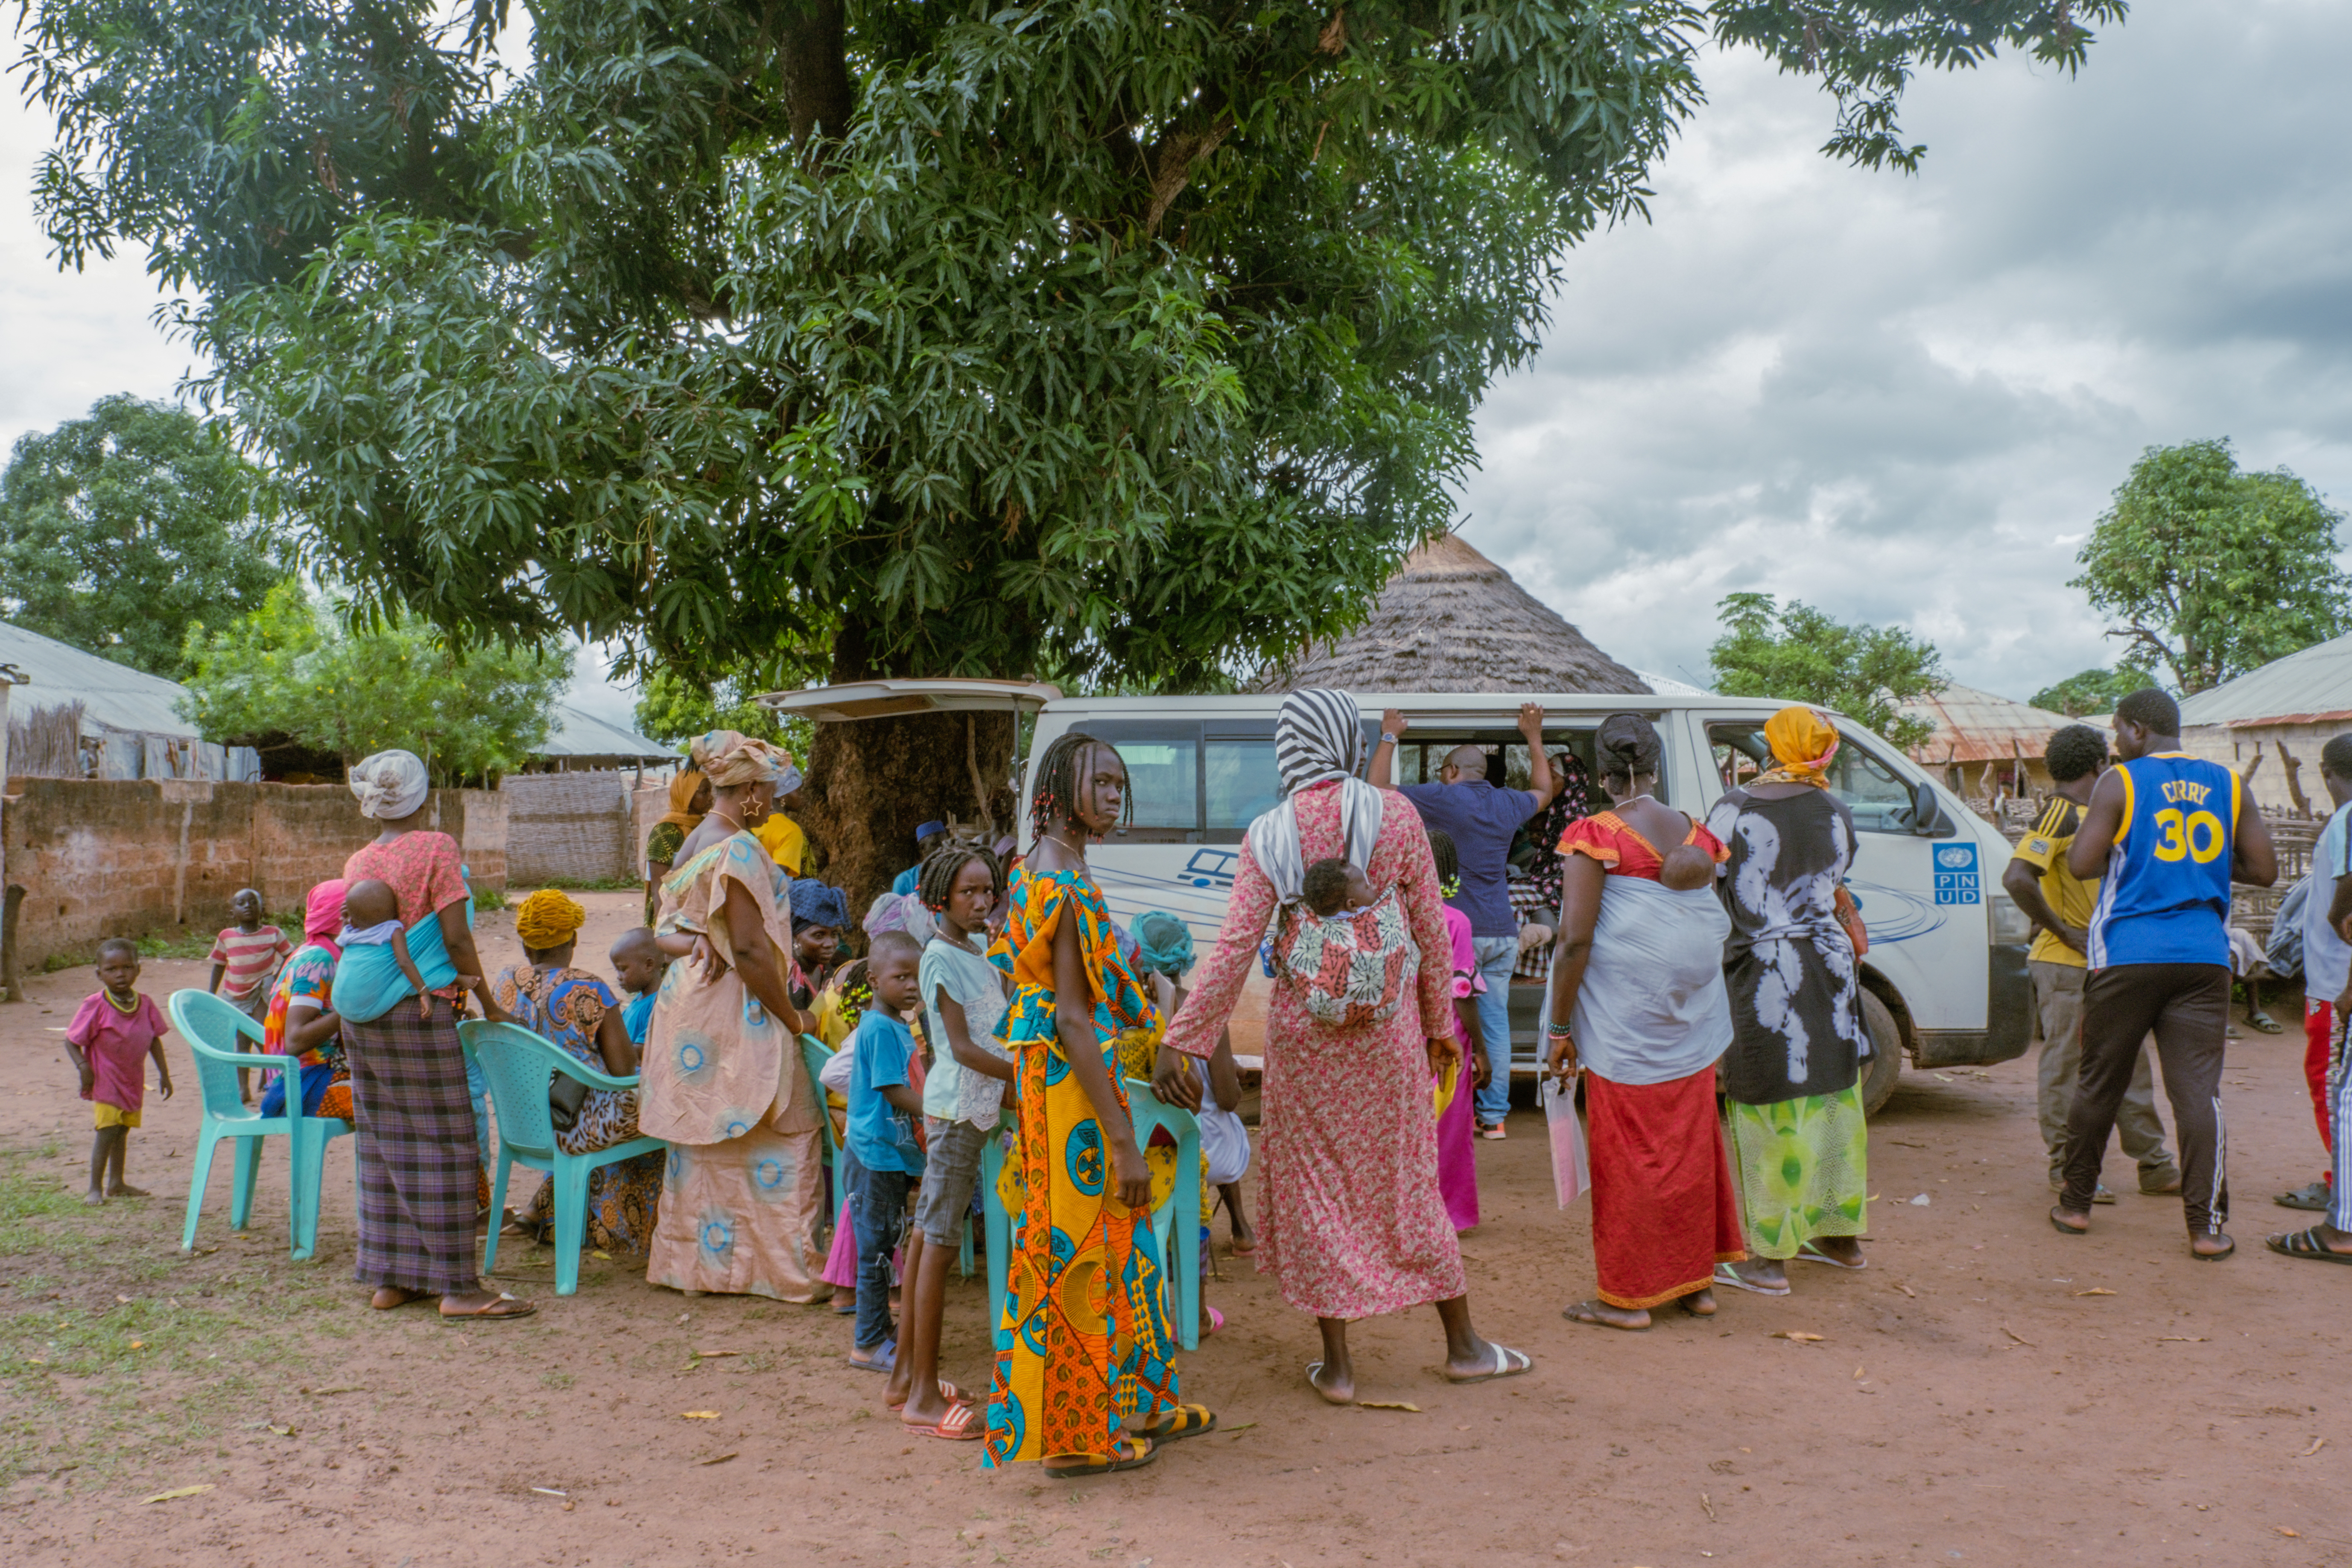 Population gathering outside the mobile civil registry in Fulacunda, Guinea Bissau Photo